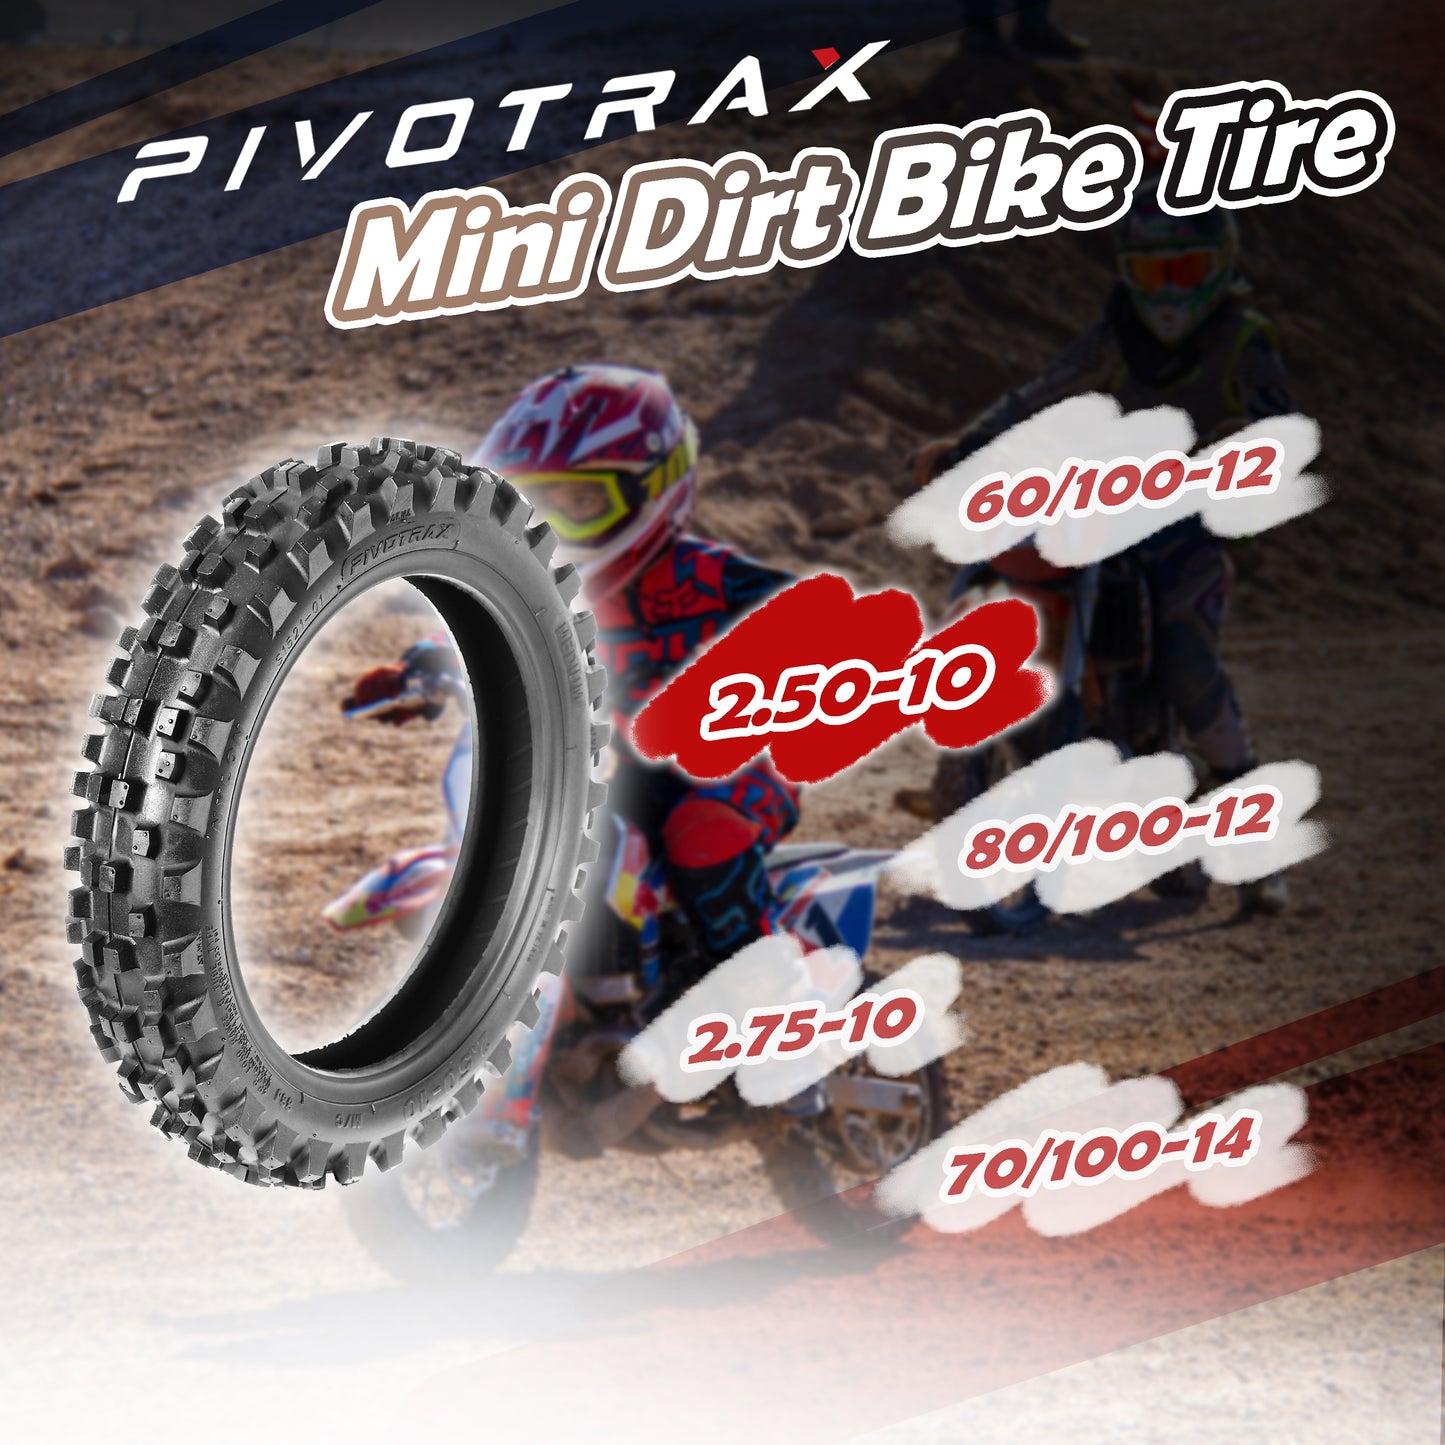 Mini Dirt Bike Tires